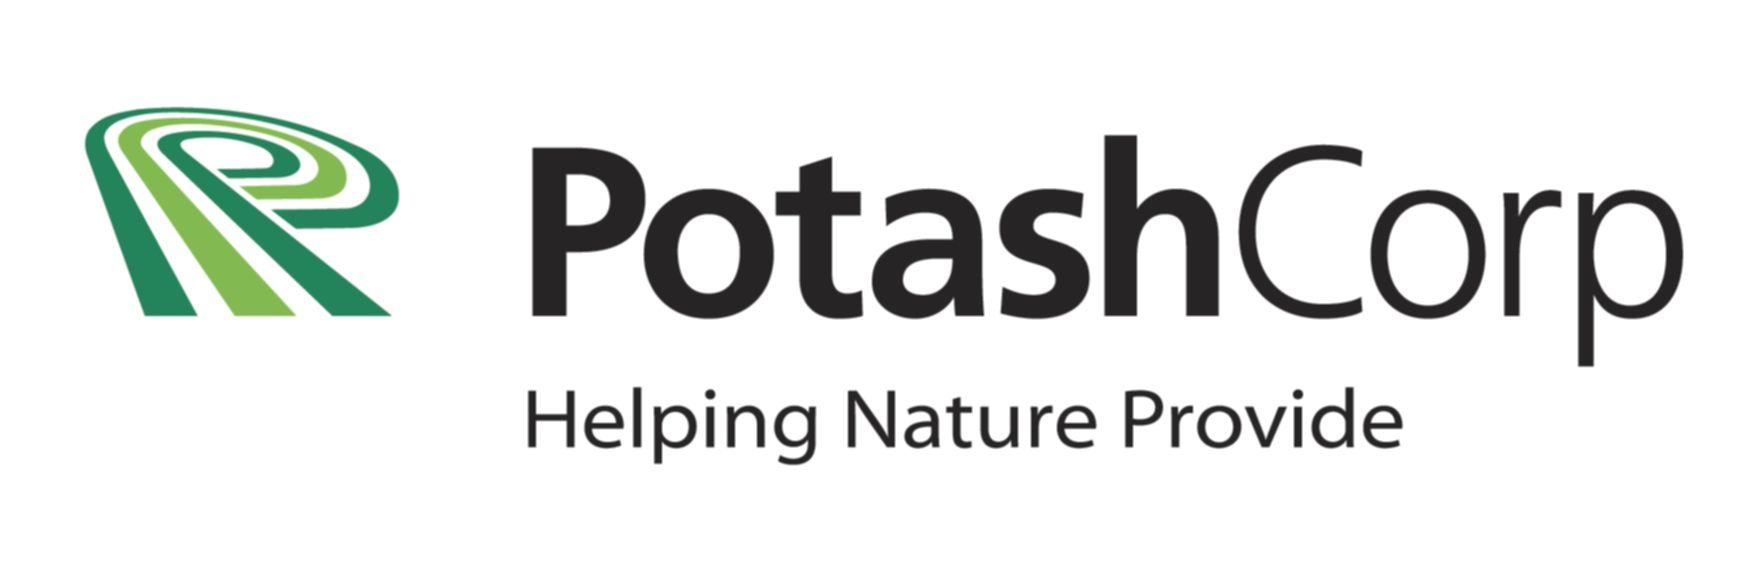 PotashCorp Logo - Reconciliation In Action